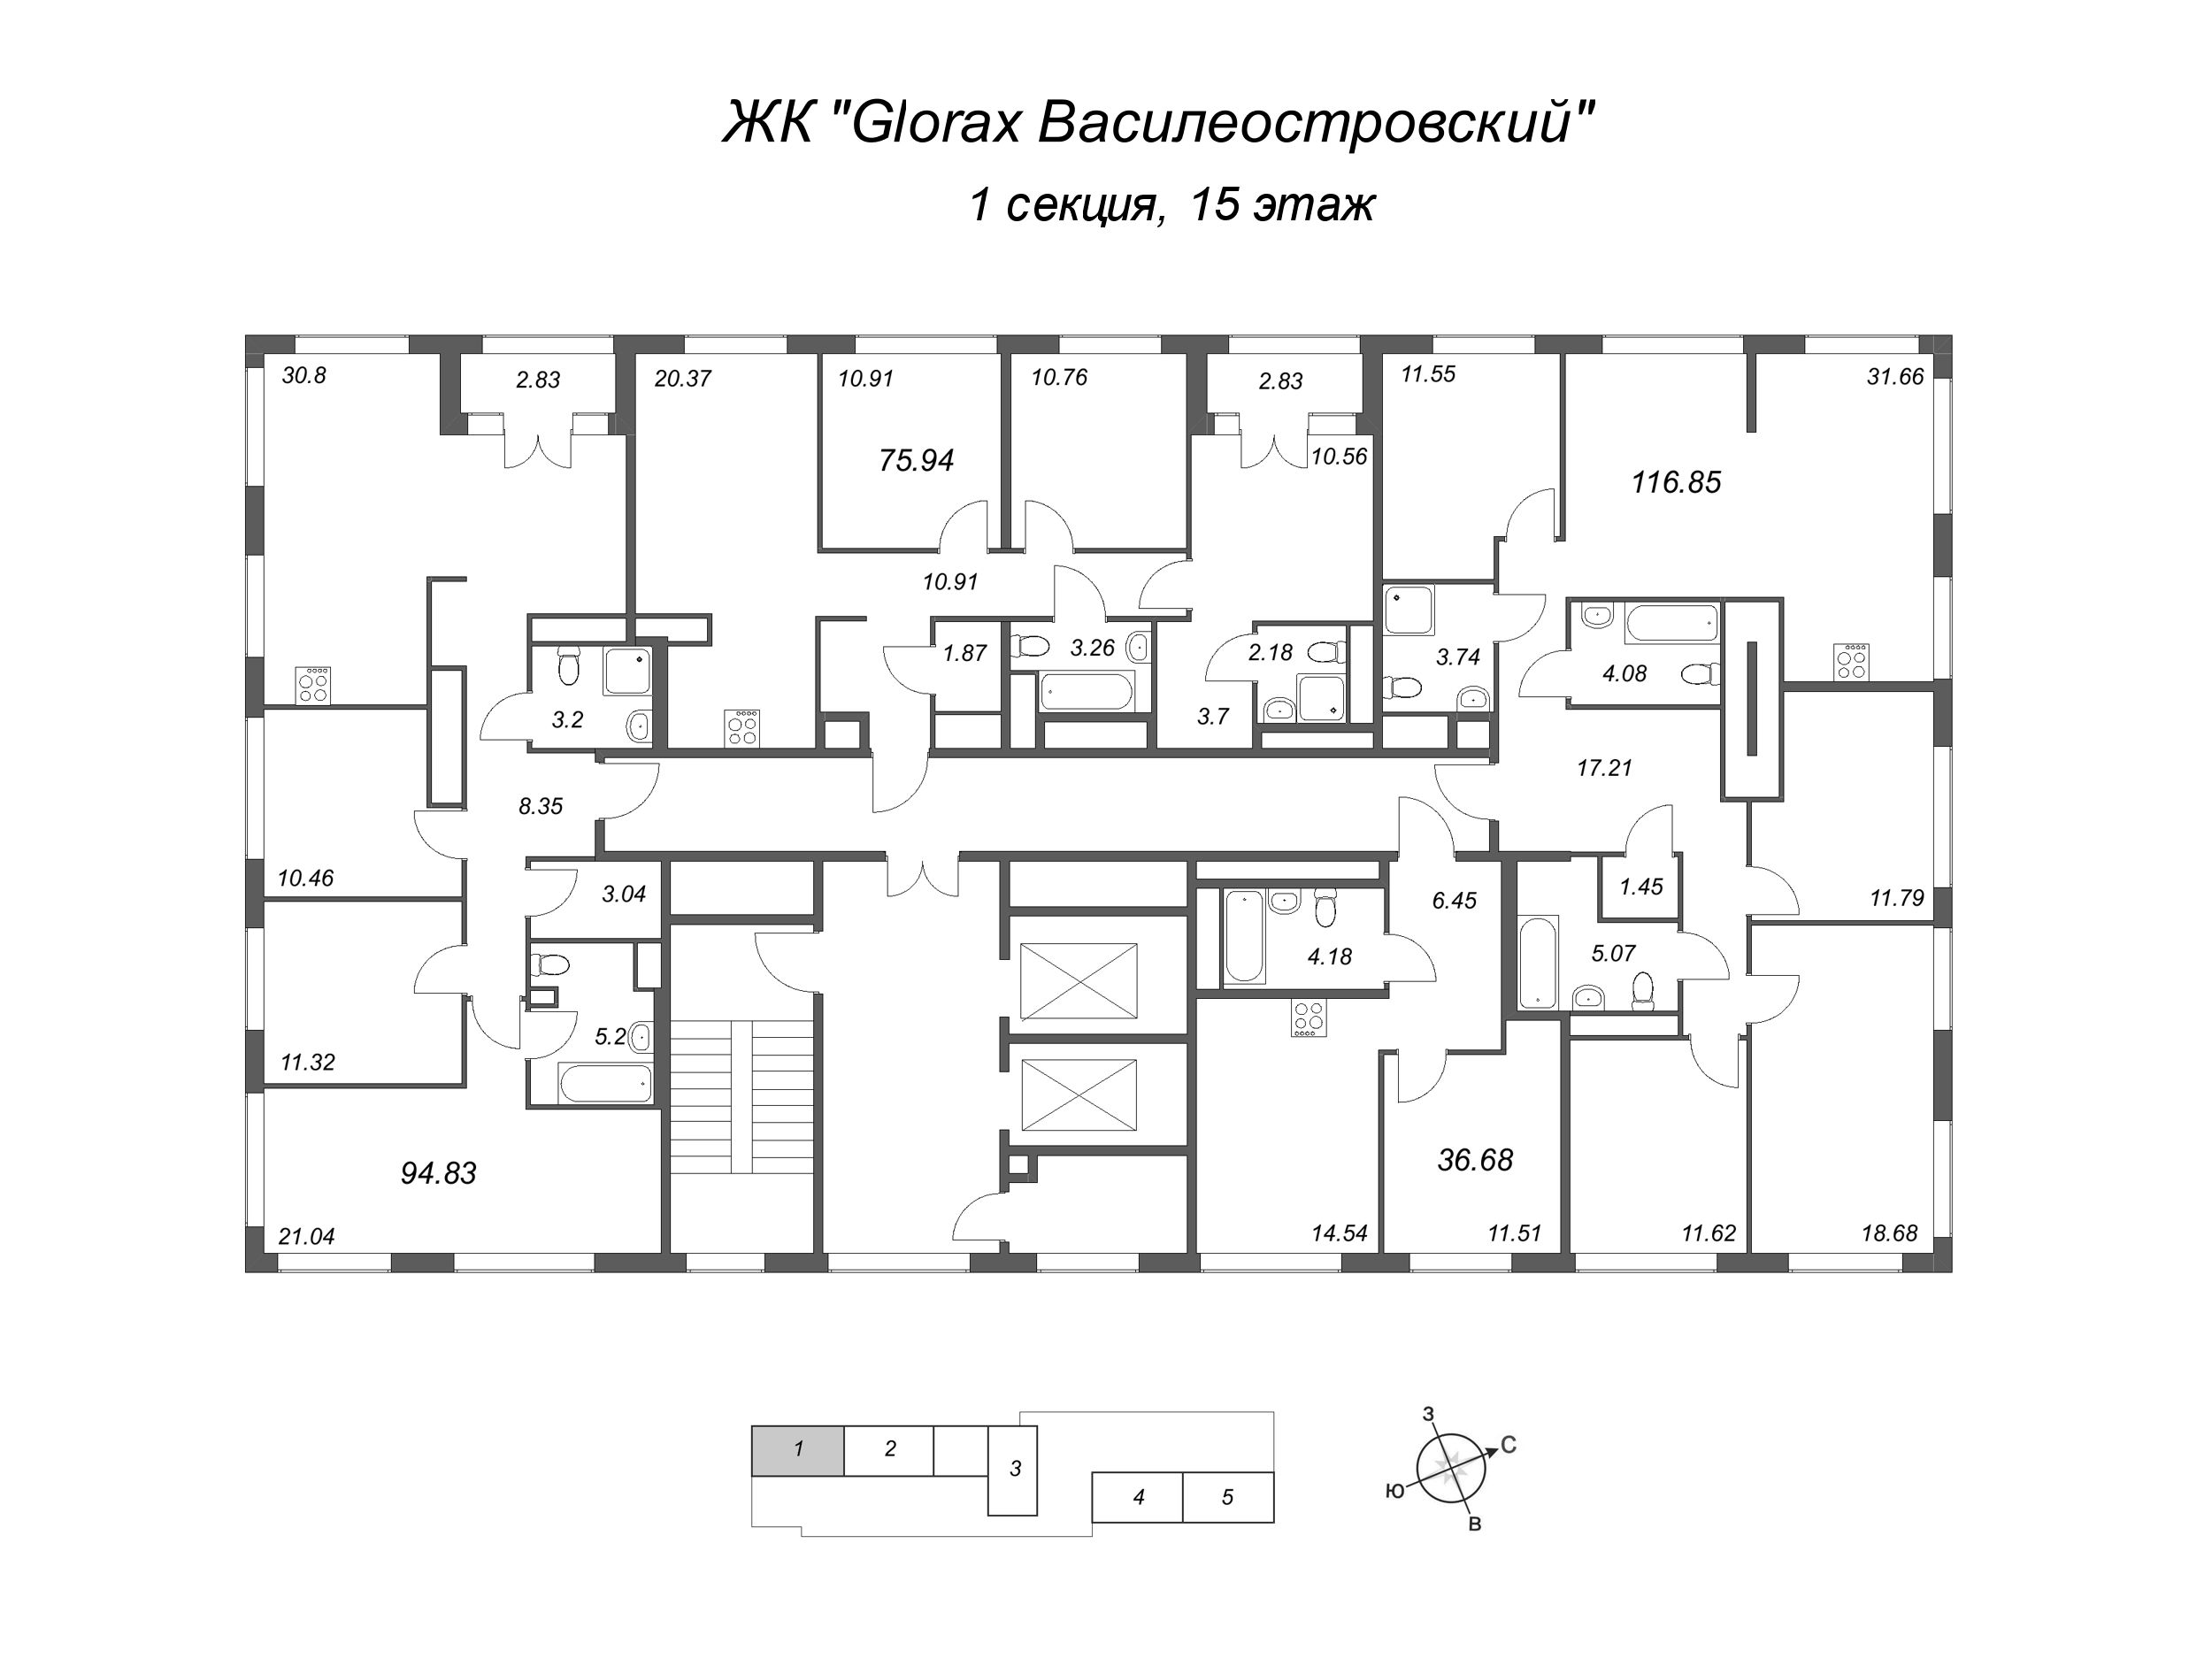 5-комнатная (Евро) квартира, 116.85 м² - планировка этажа